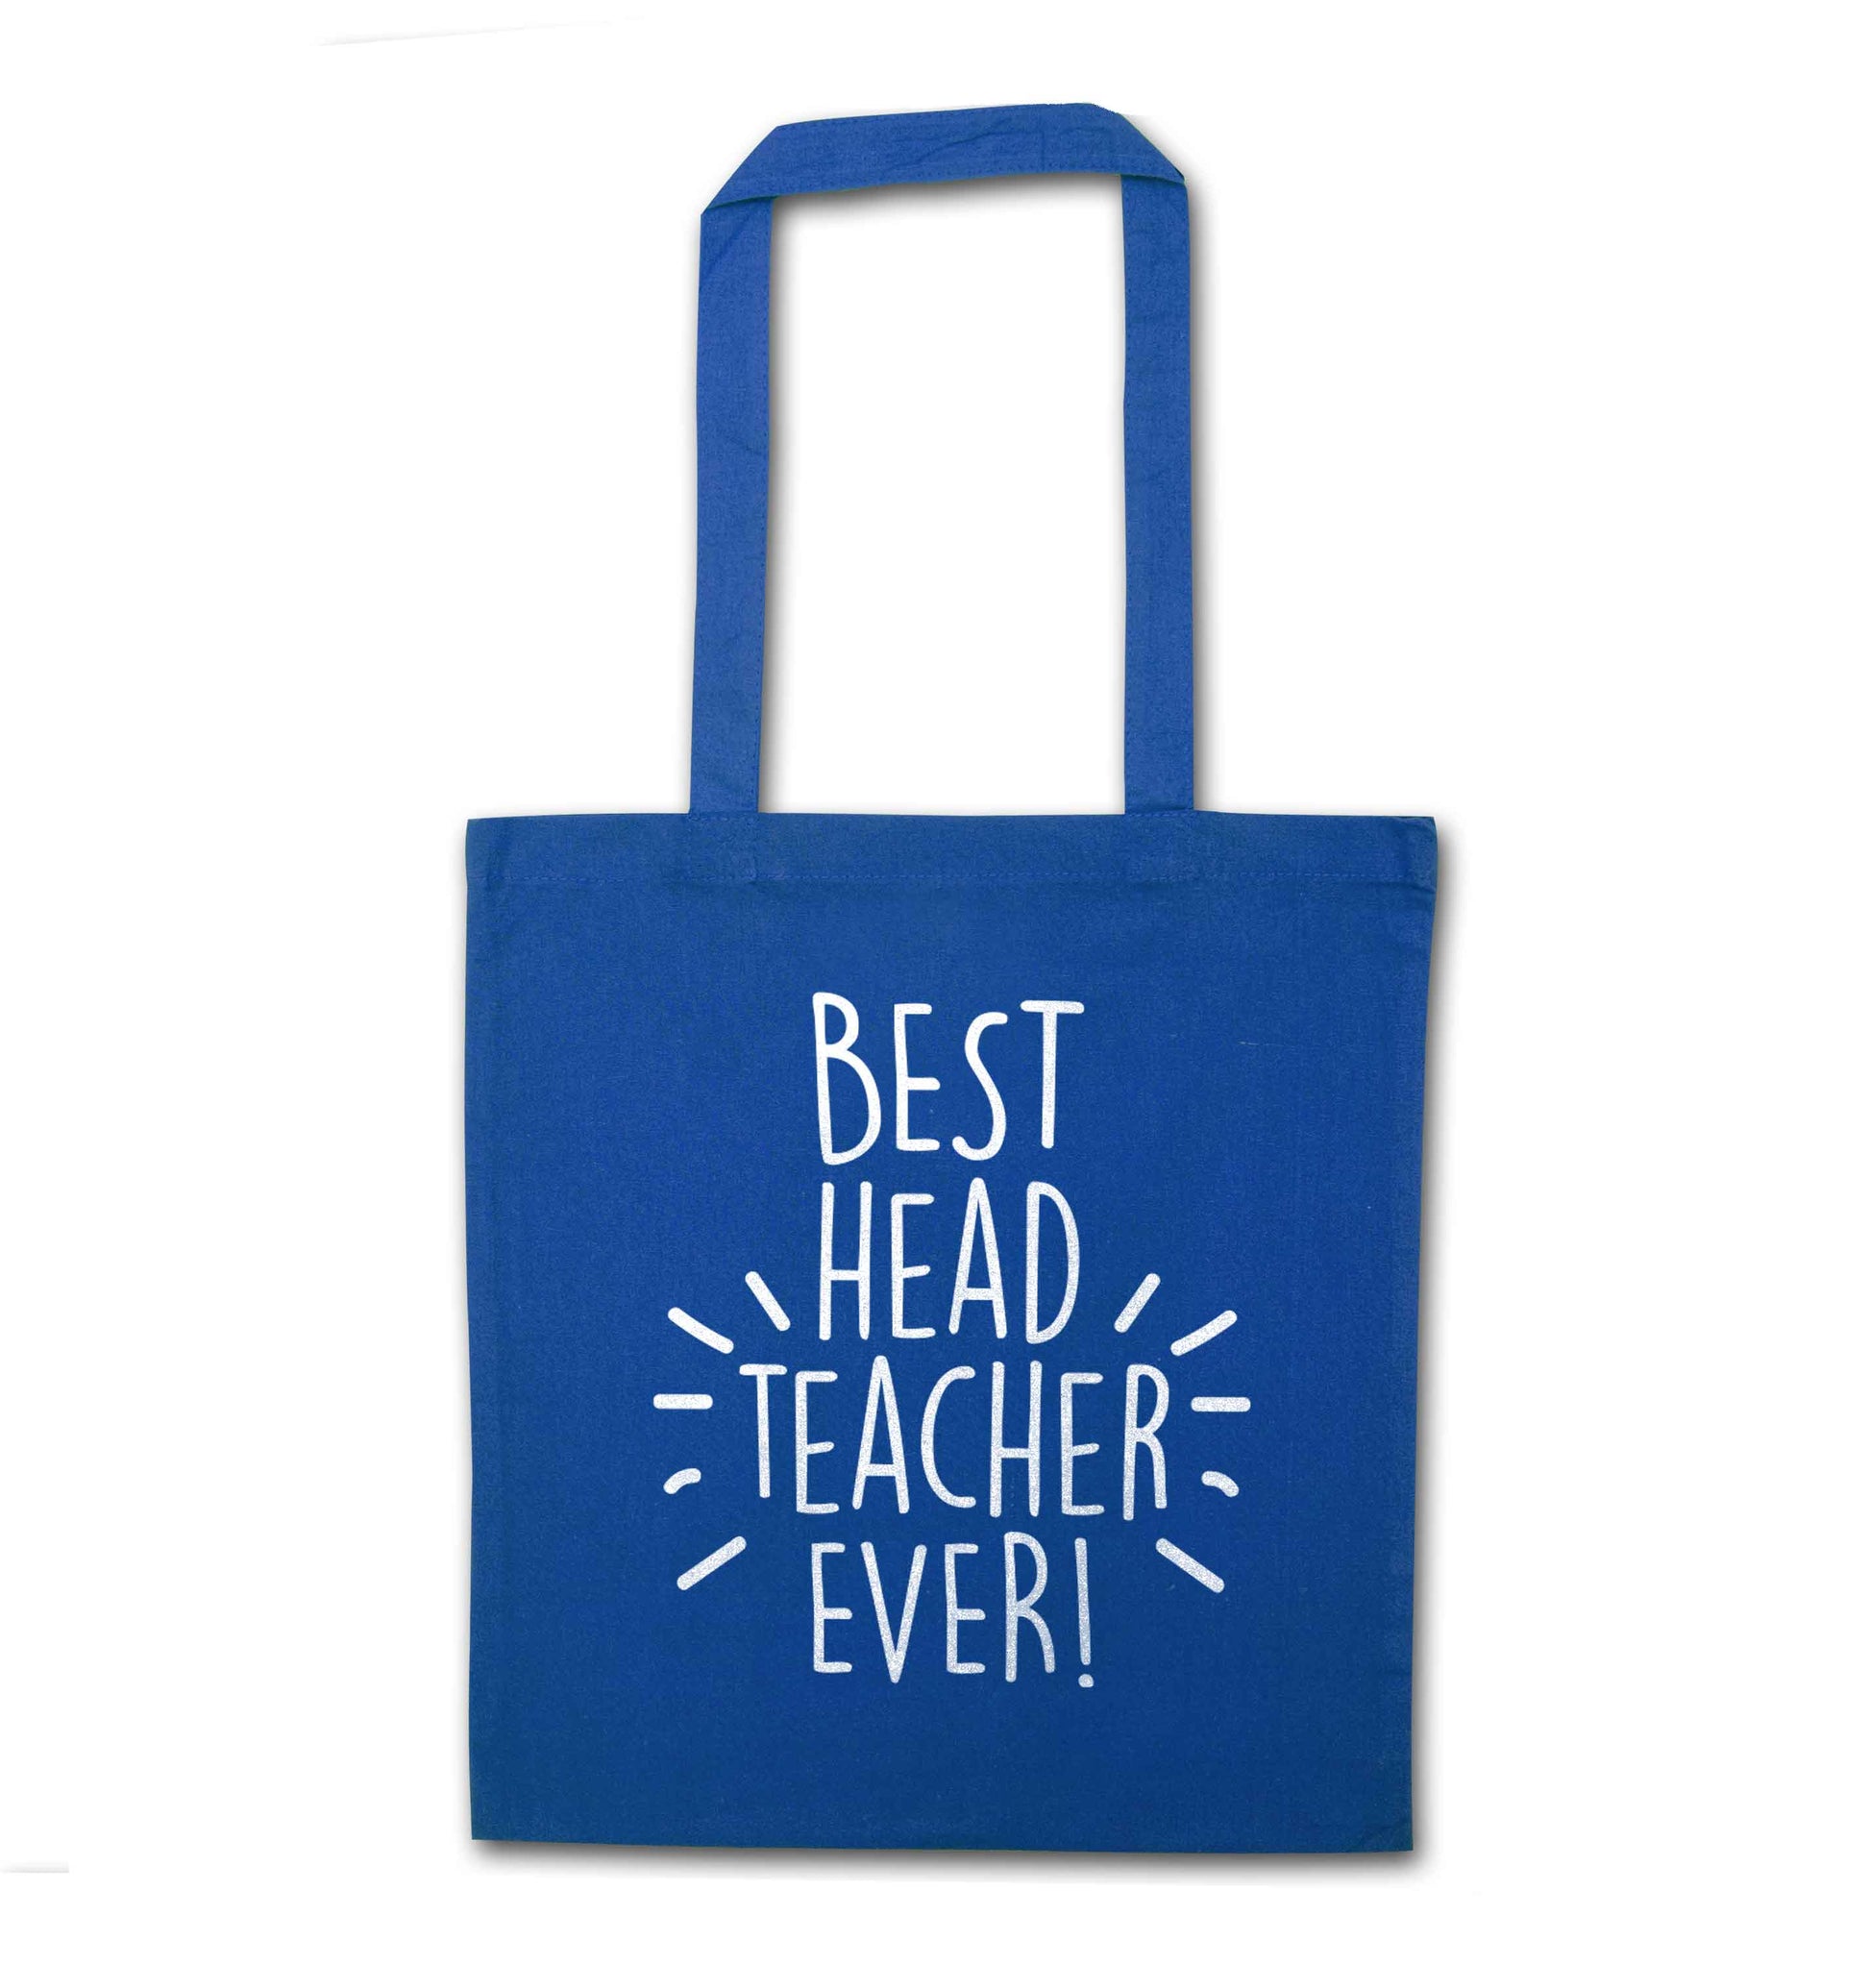 Best head teacher ever! blue tote bag